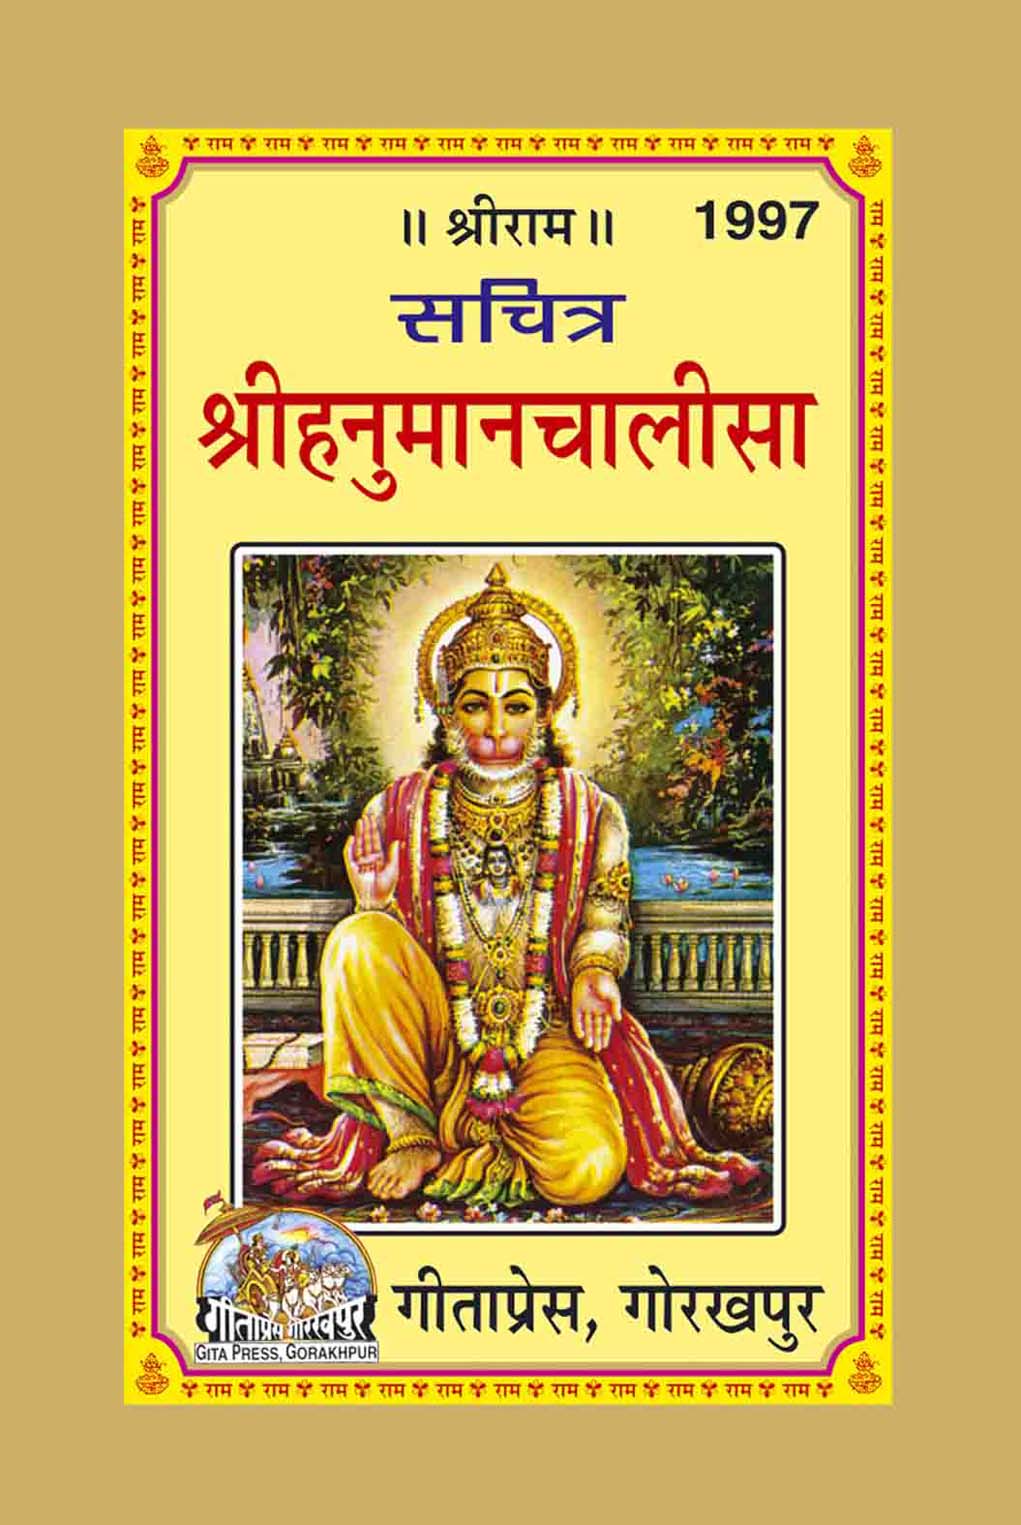 SANATAN  Hanuman Chalisa (Hindi to English Translation) by Gita Press